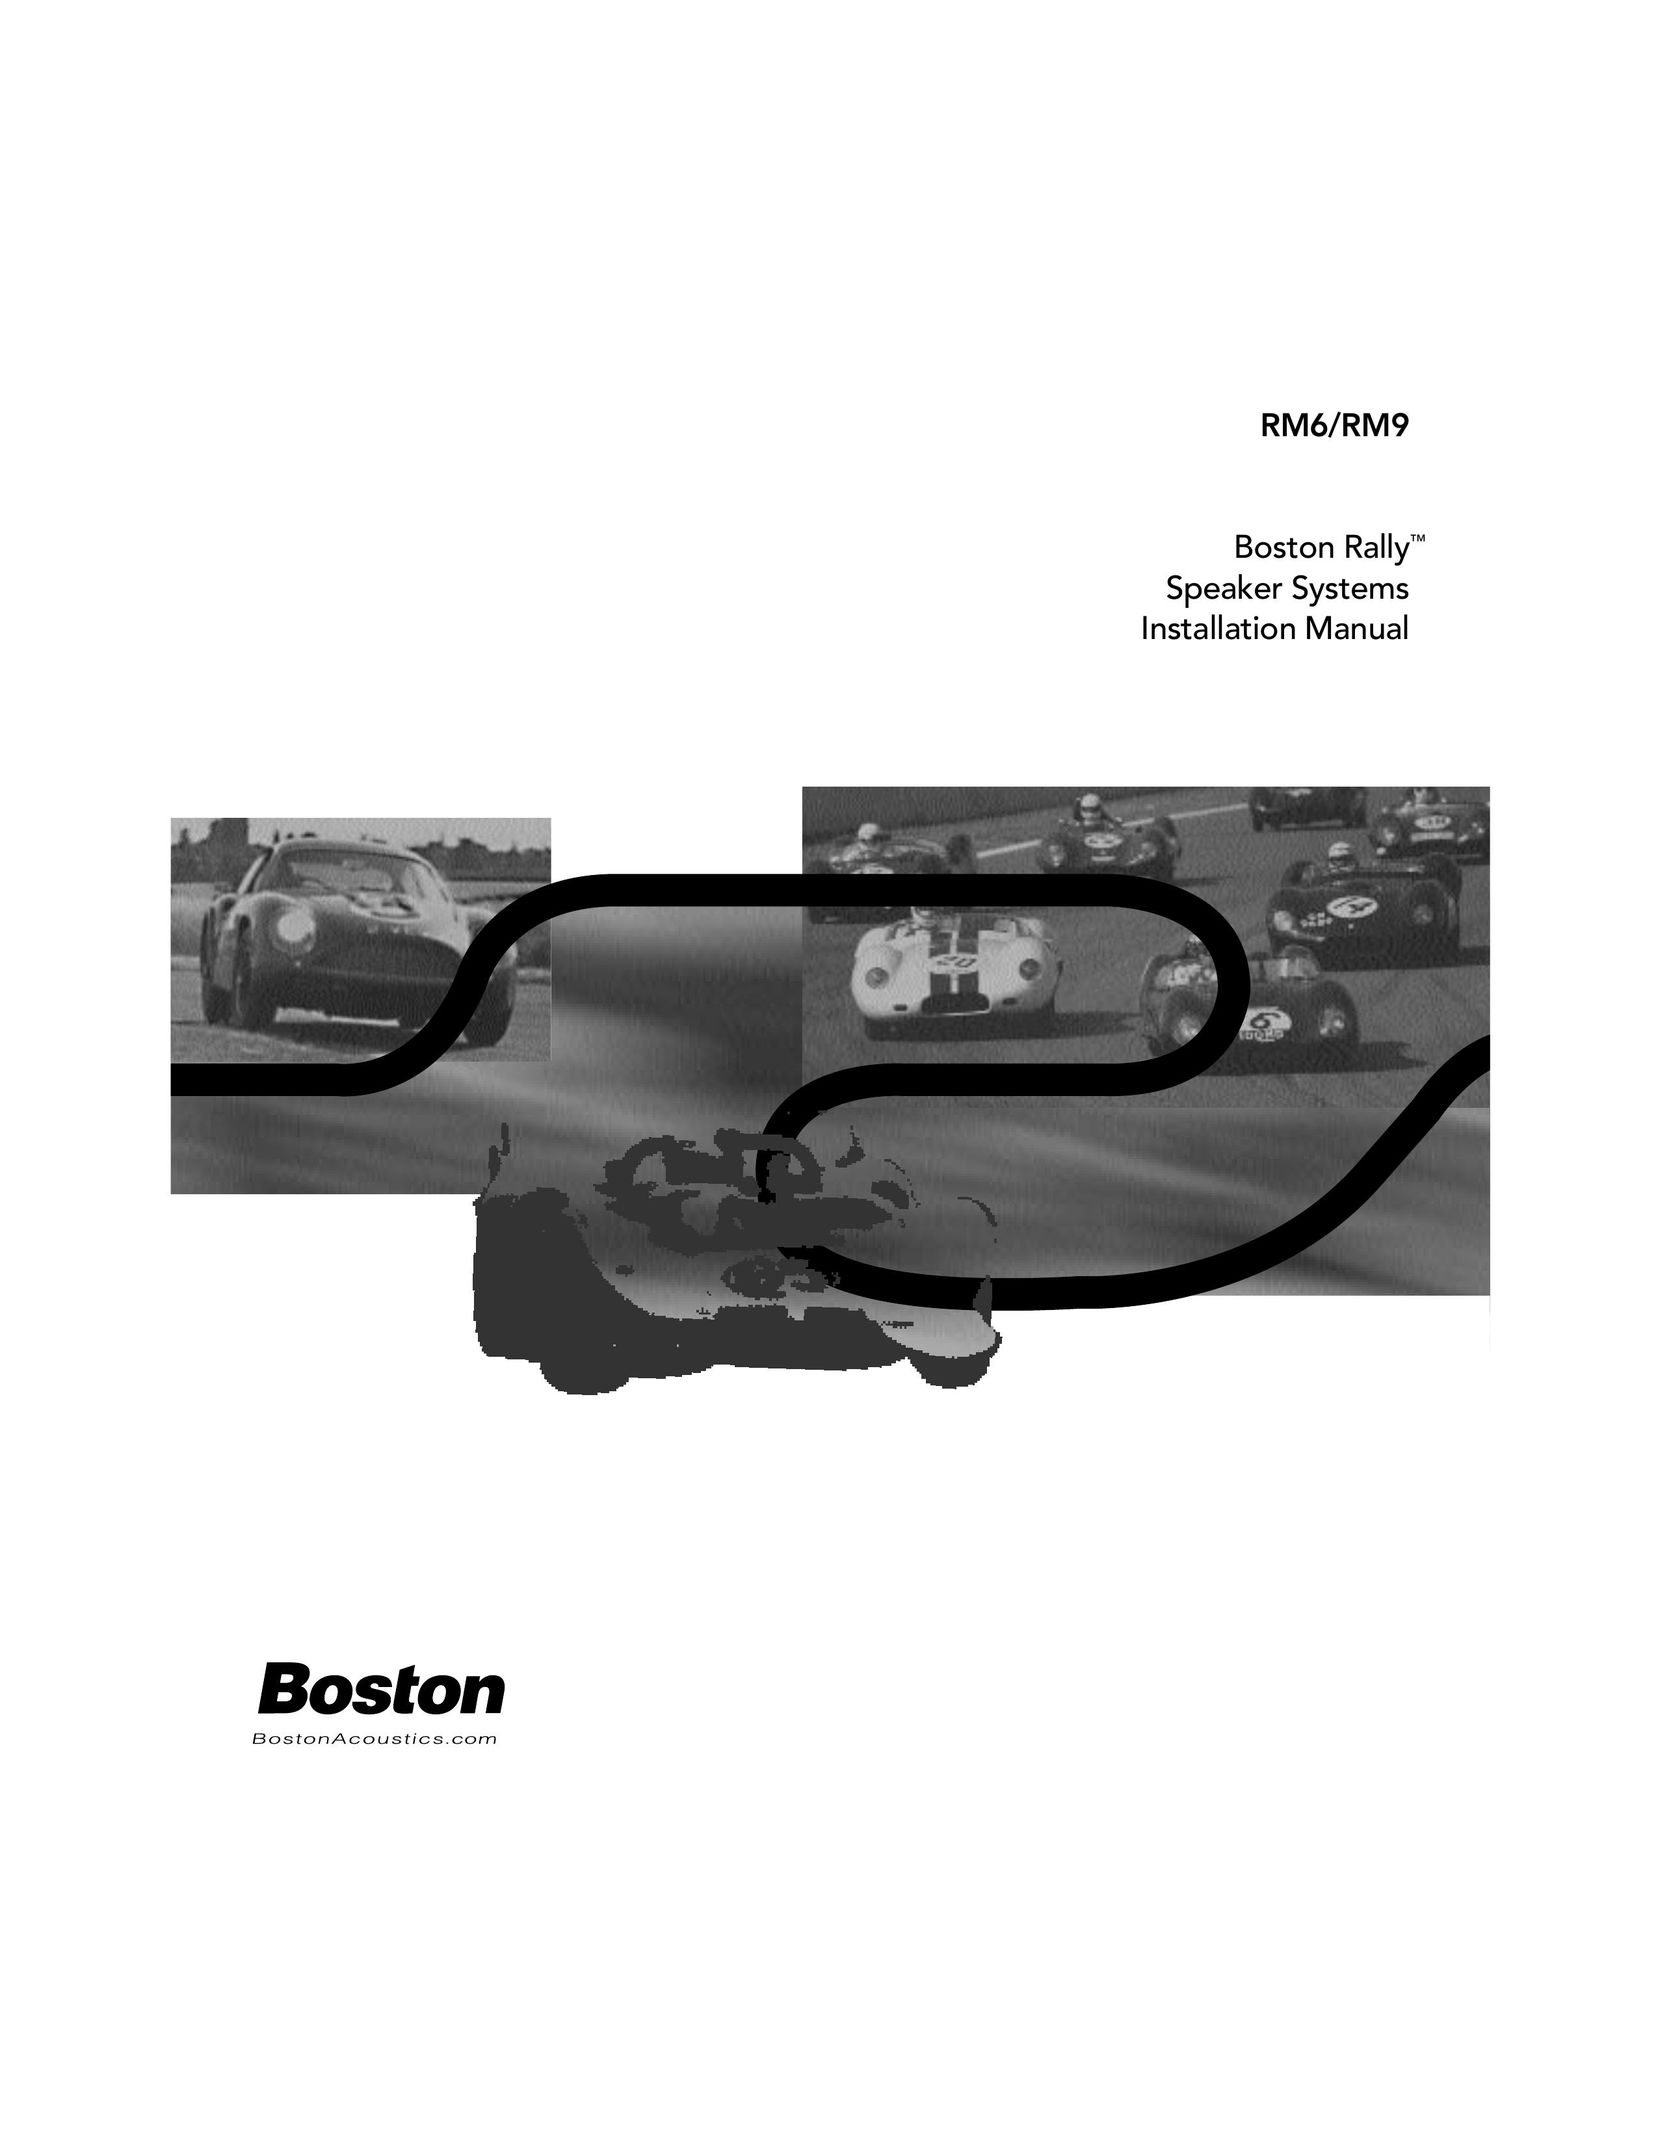 Boston Acoustics RM9 Car Speaker User Manual